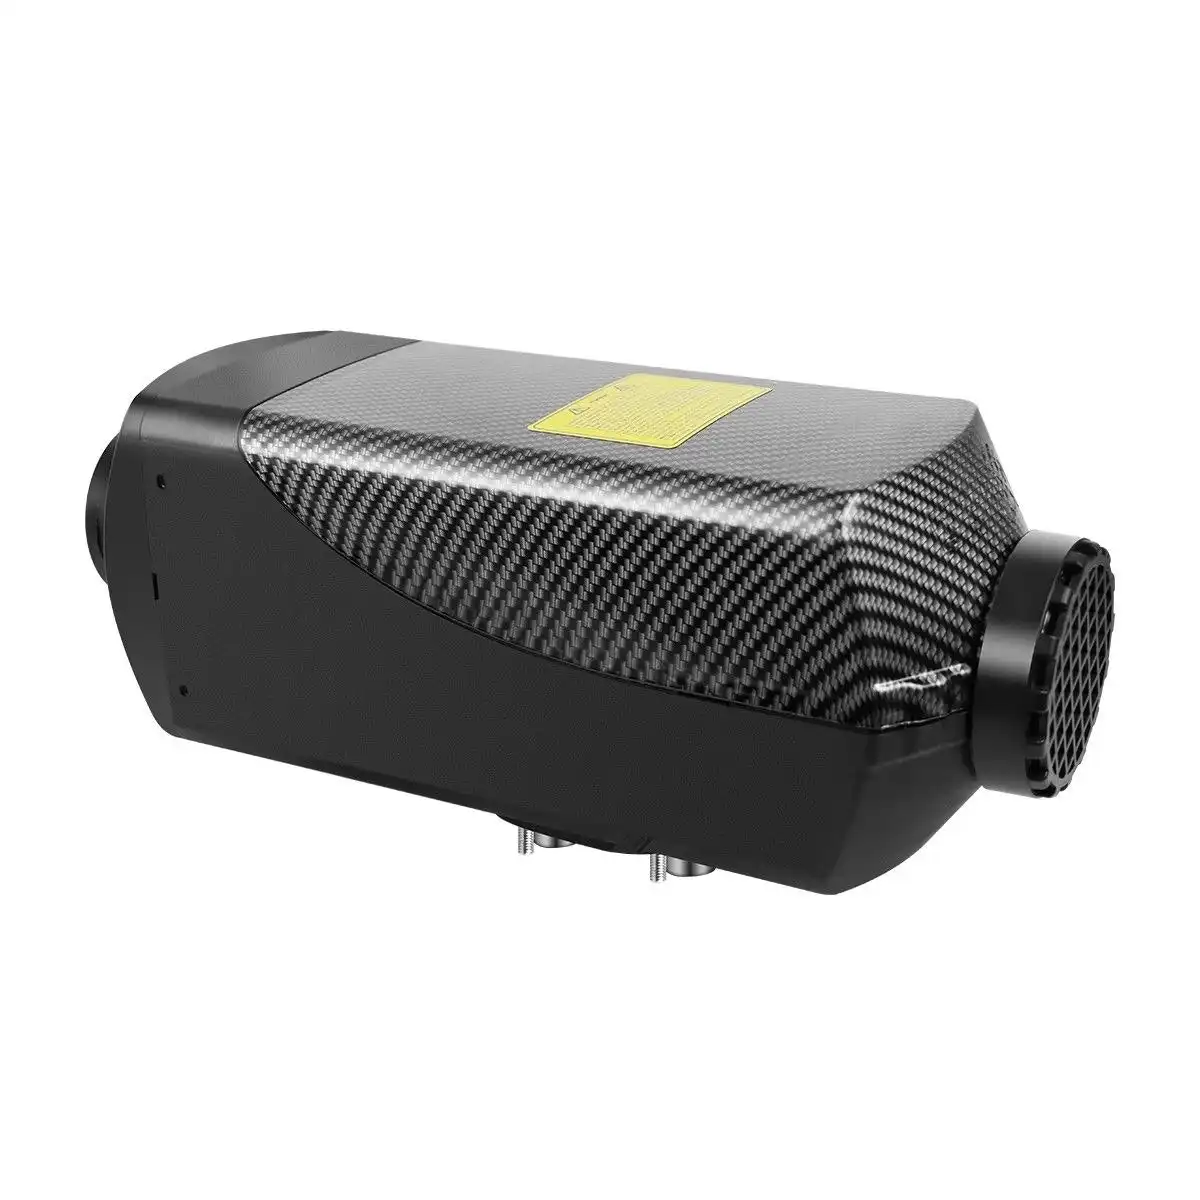 DASHOTO 12V 8kW Diesel Air Heater Portable Parking Heater Remote Control LCD Panel Black & Grey